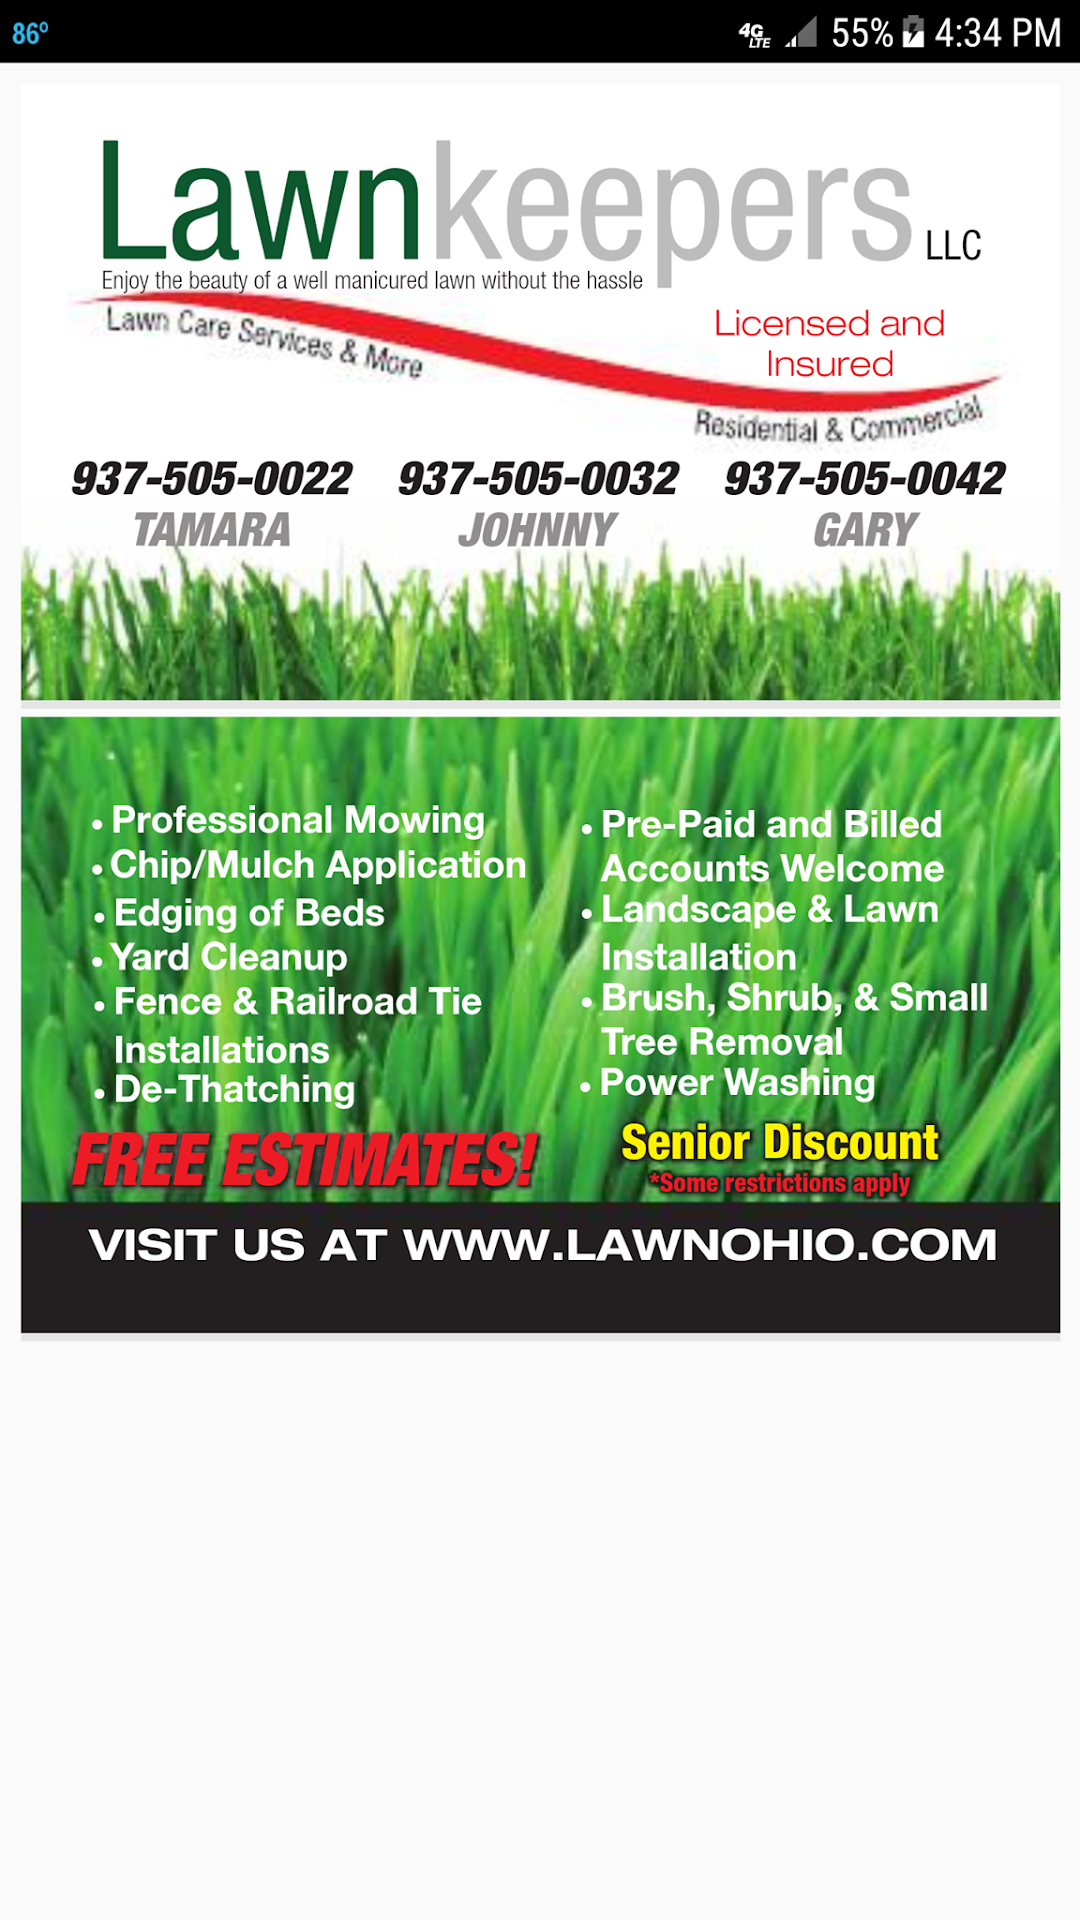 LawnKeepers LLC